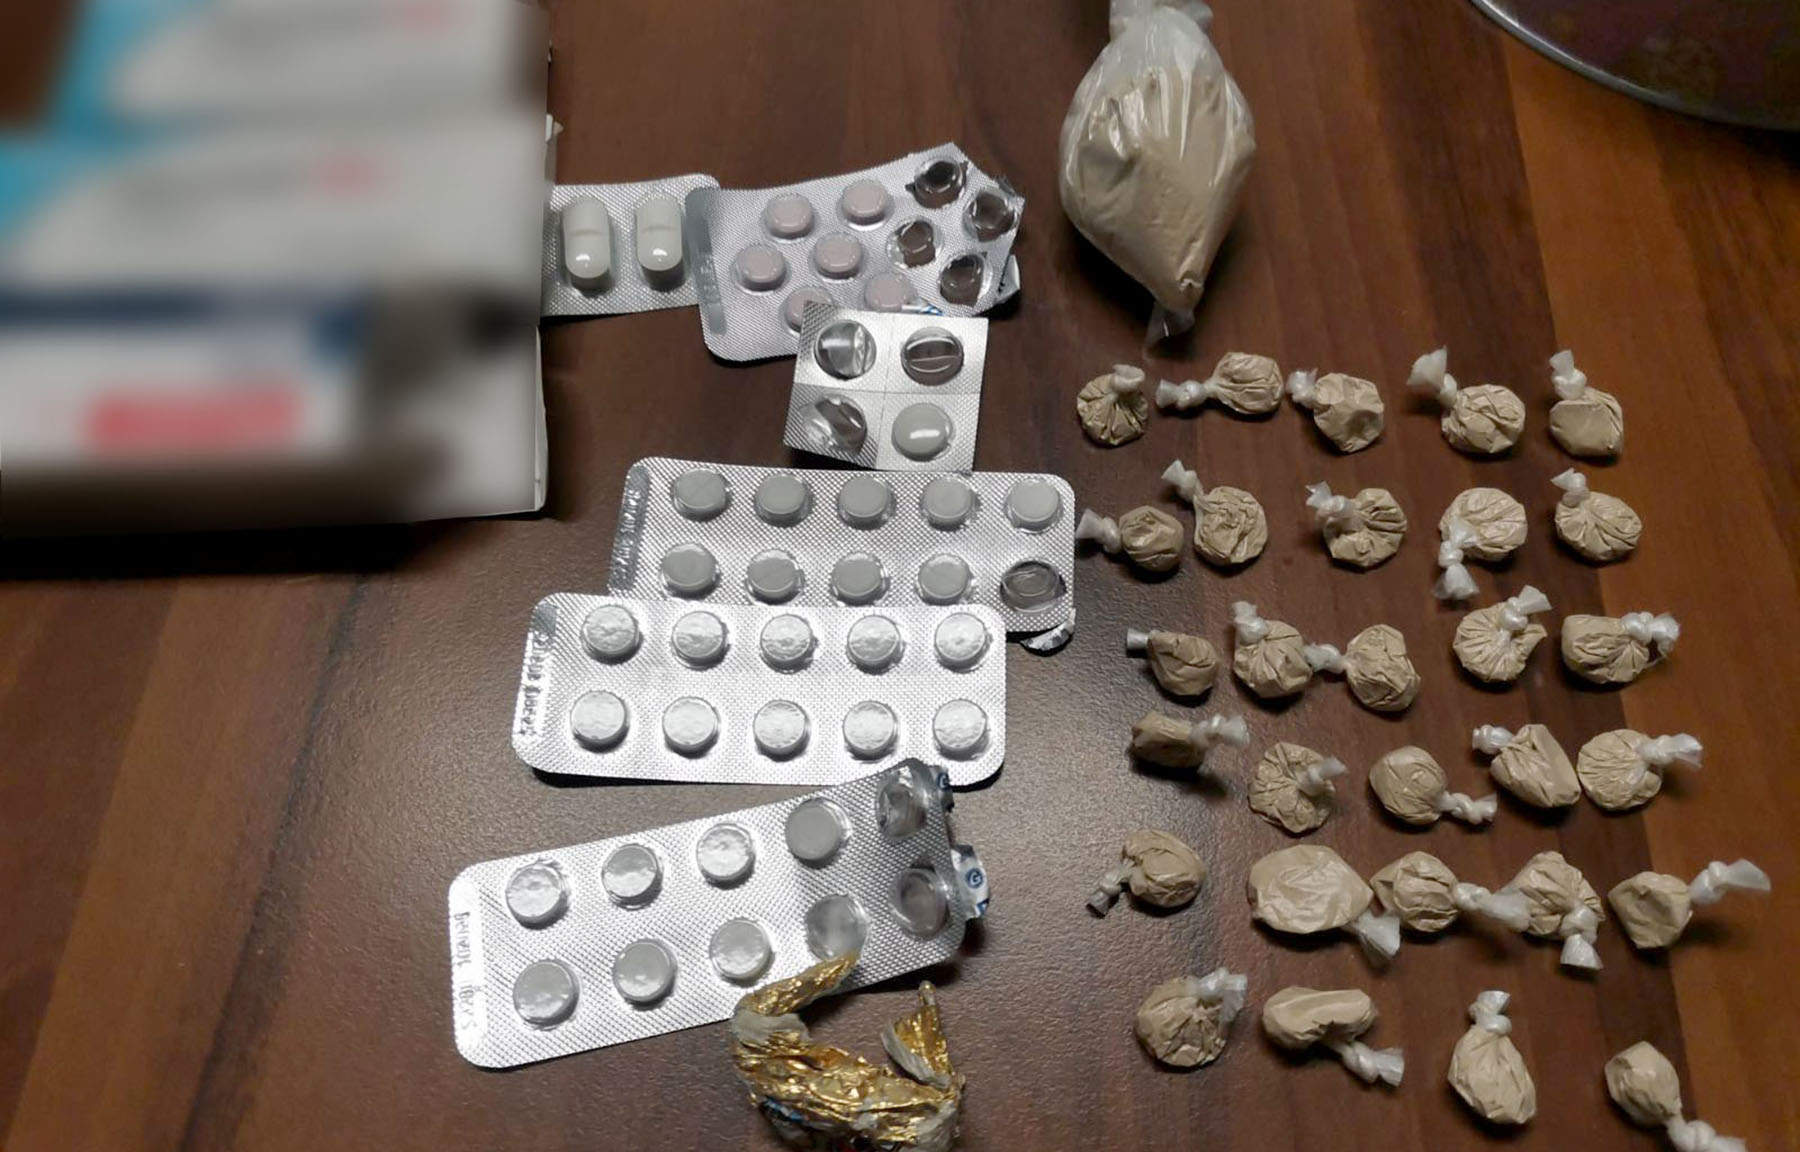 Пронађен хероин, таблете са листе психоактивних супстанци и затечено лице са потернице